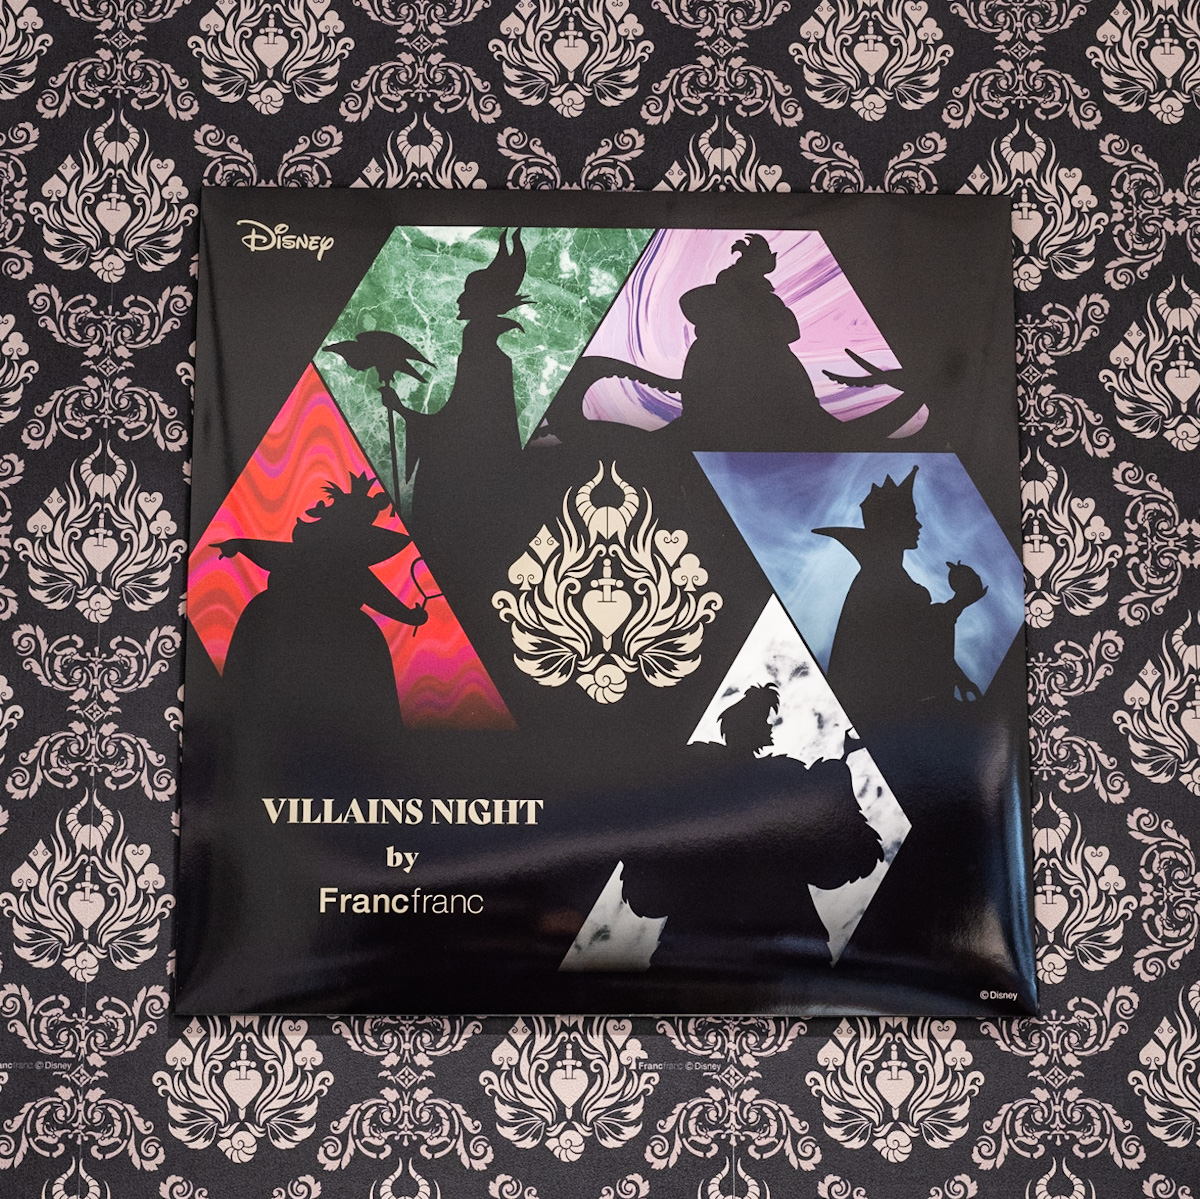 「VILLAINS NIGHT by Francfranc(ヴィランズ ナイト バイ フランフラン)」